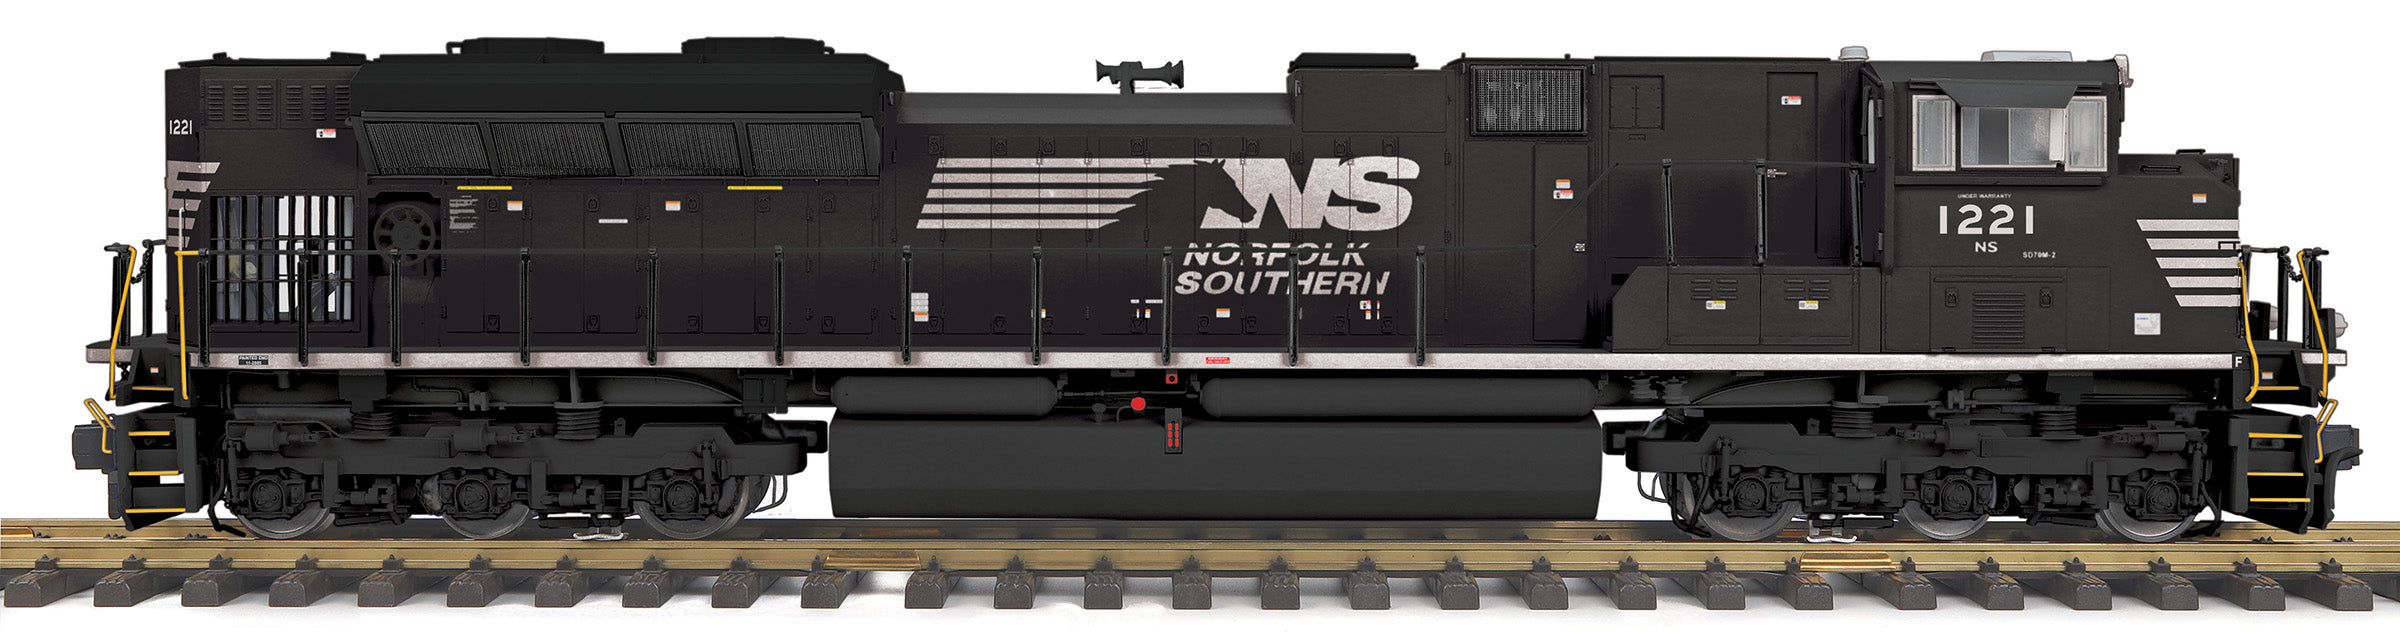 MTH G 70-2153-1 - SD70AH Diesel Engine "Norfolk Southern" #1221 w/ PS3